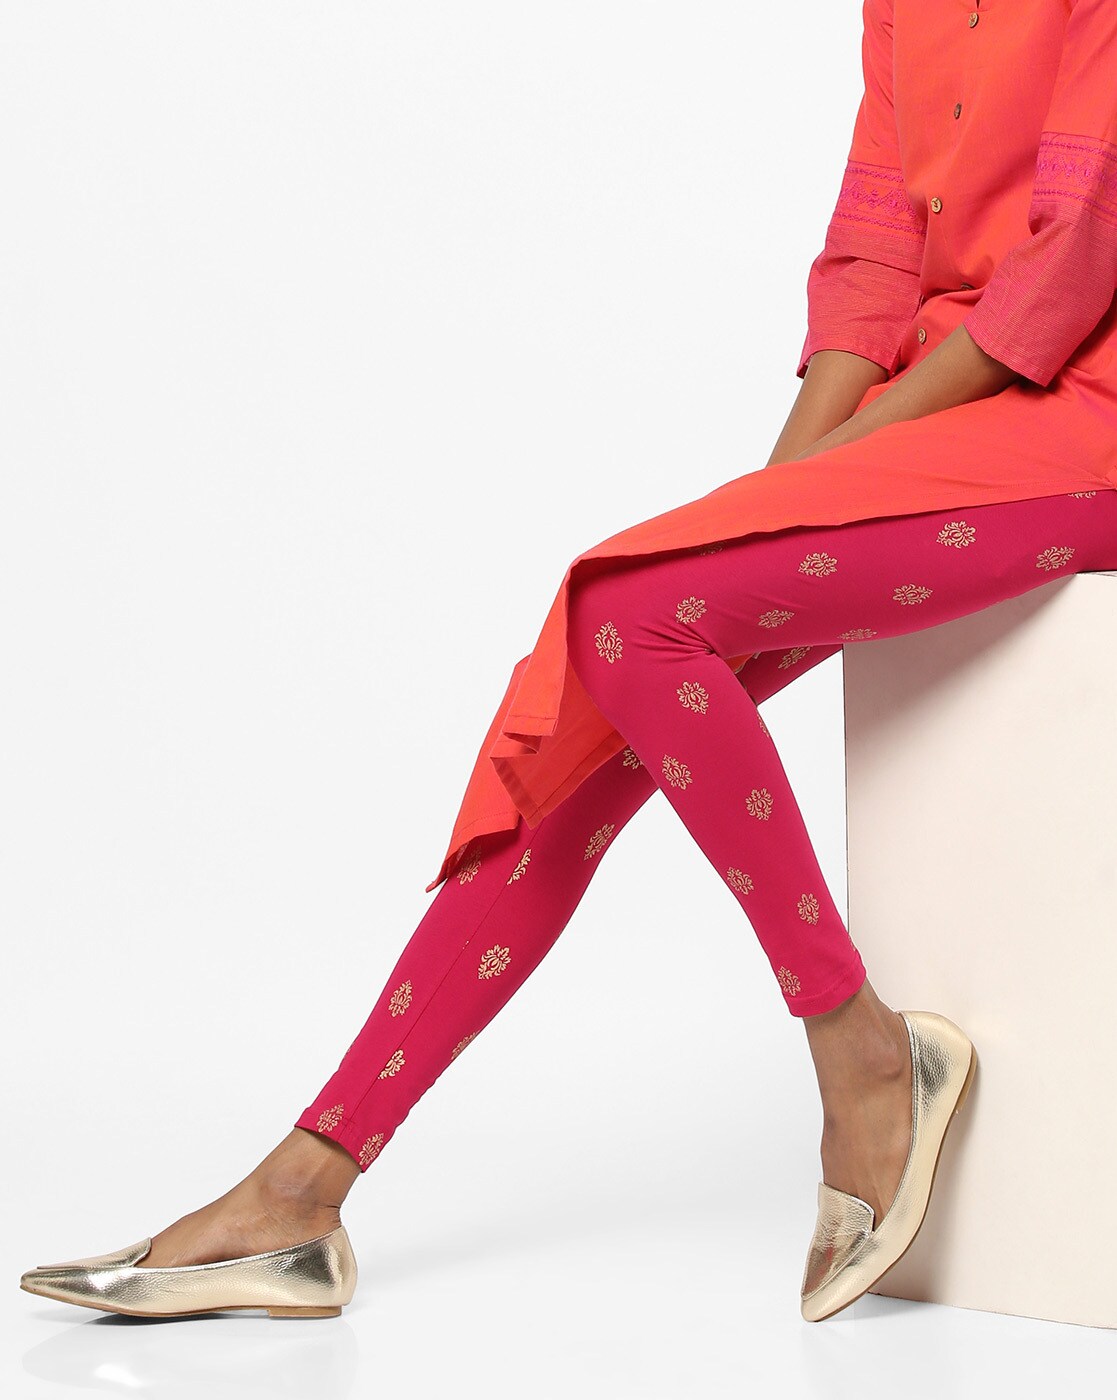 Full Length & Ankle Length Branded Leggings (avasa,Gocolors), Casual Wear  at Rs 250 in Coimbatore